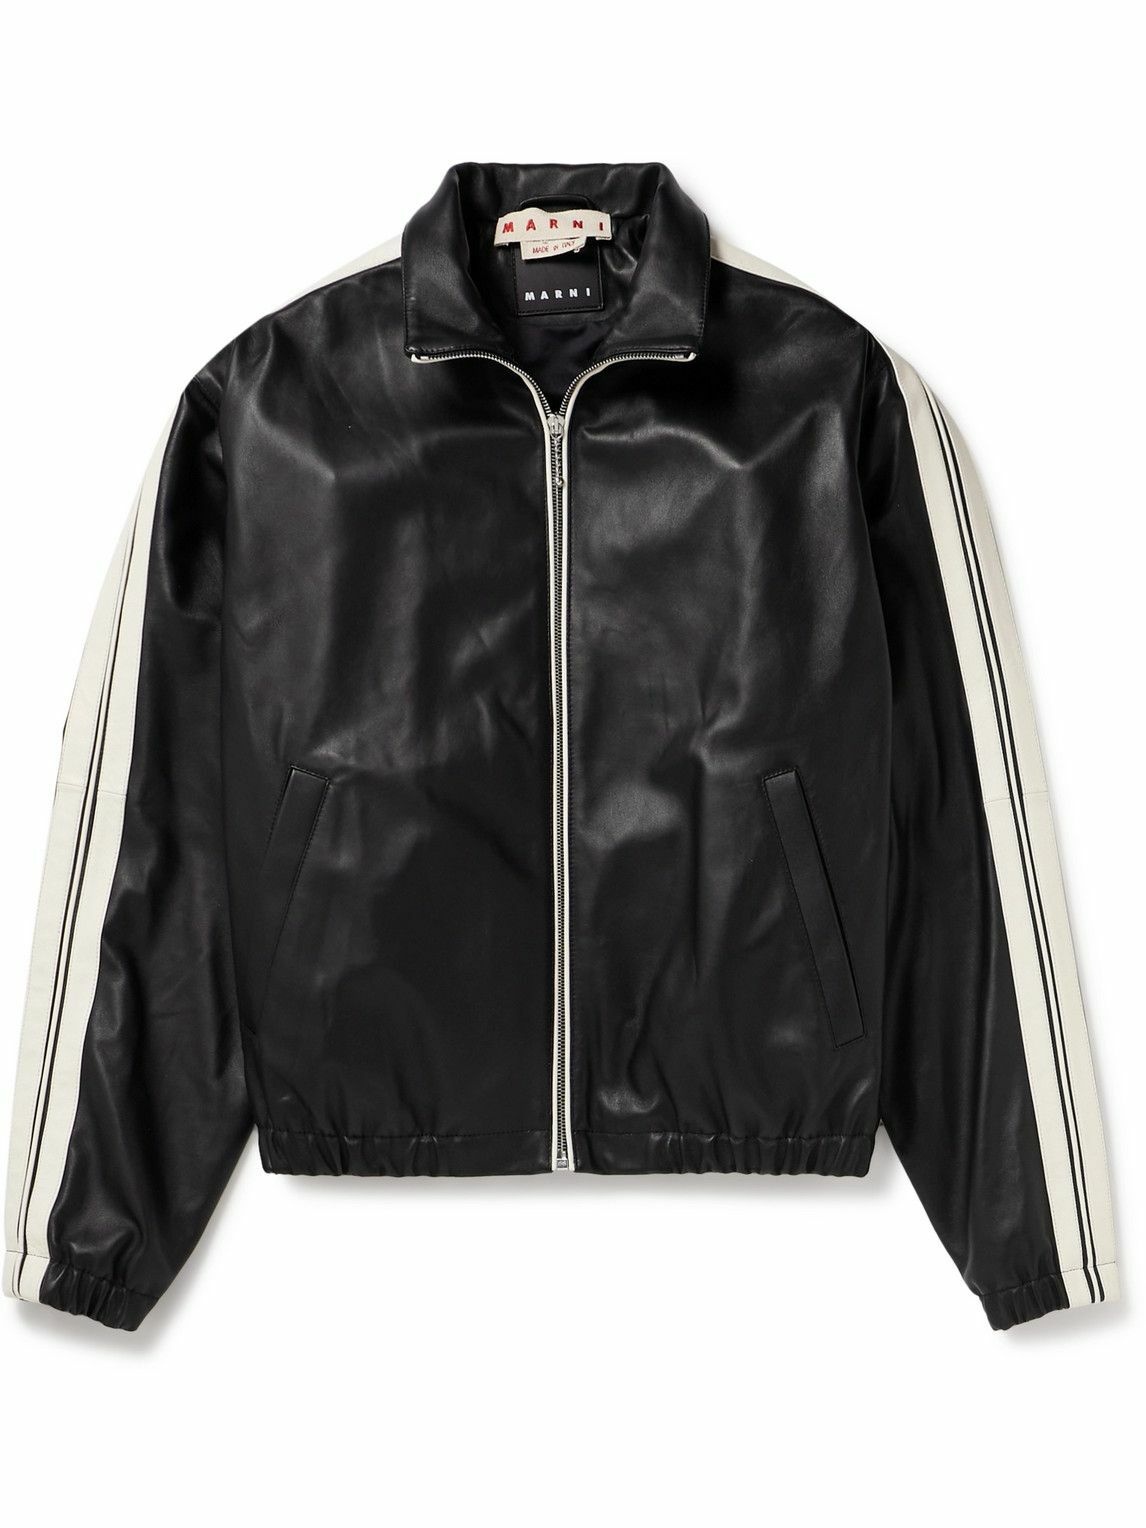 Marni - Striped Nappa Leather Track Jacket - Black Marni